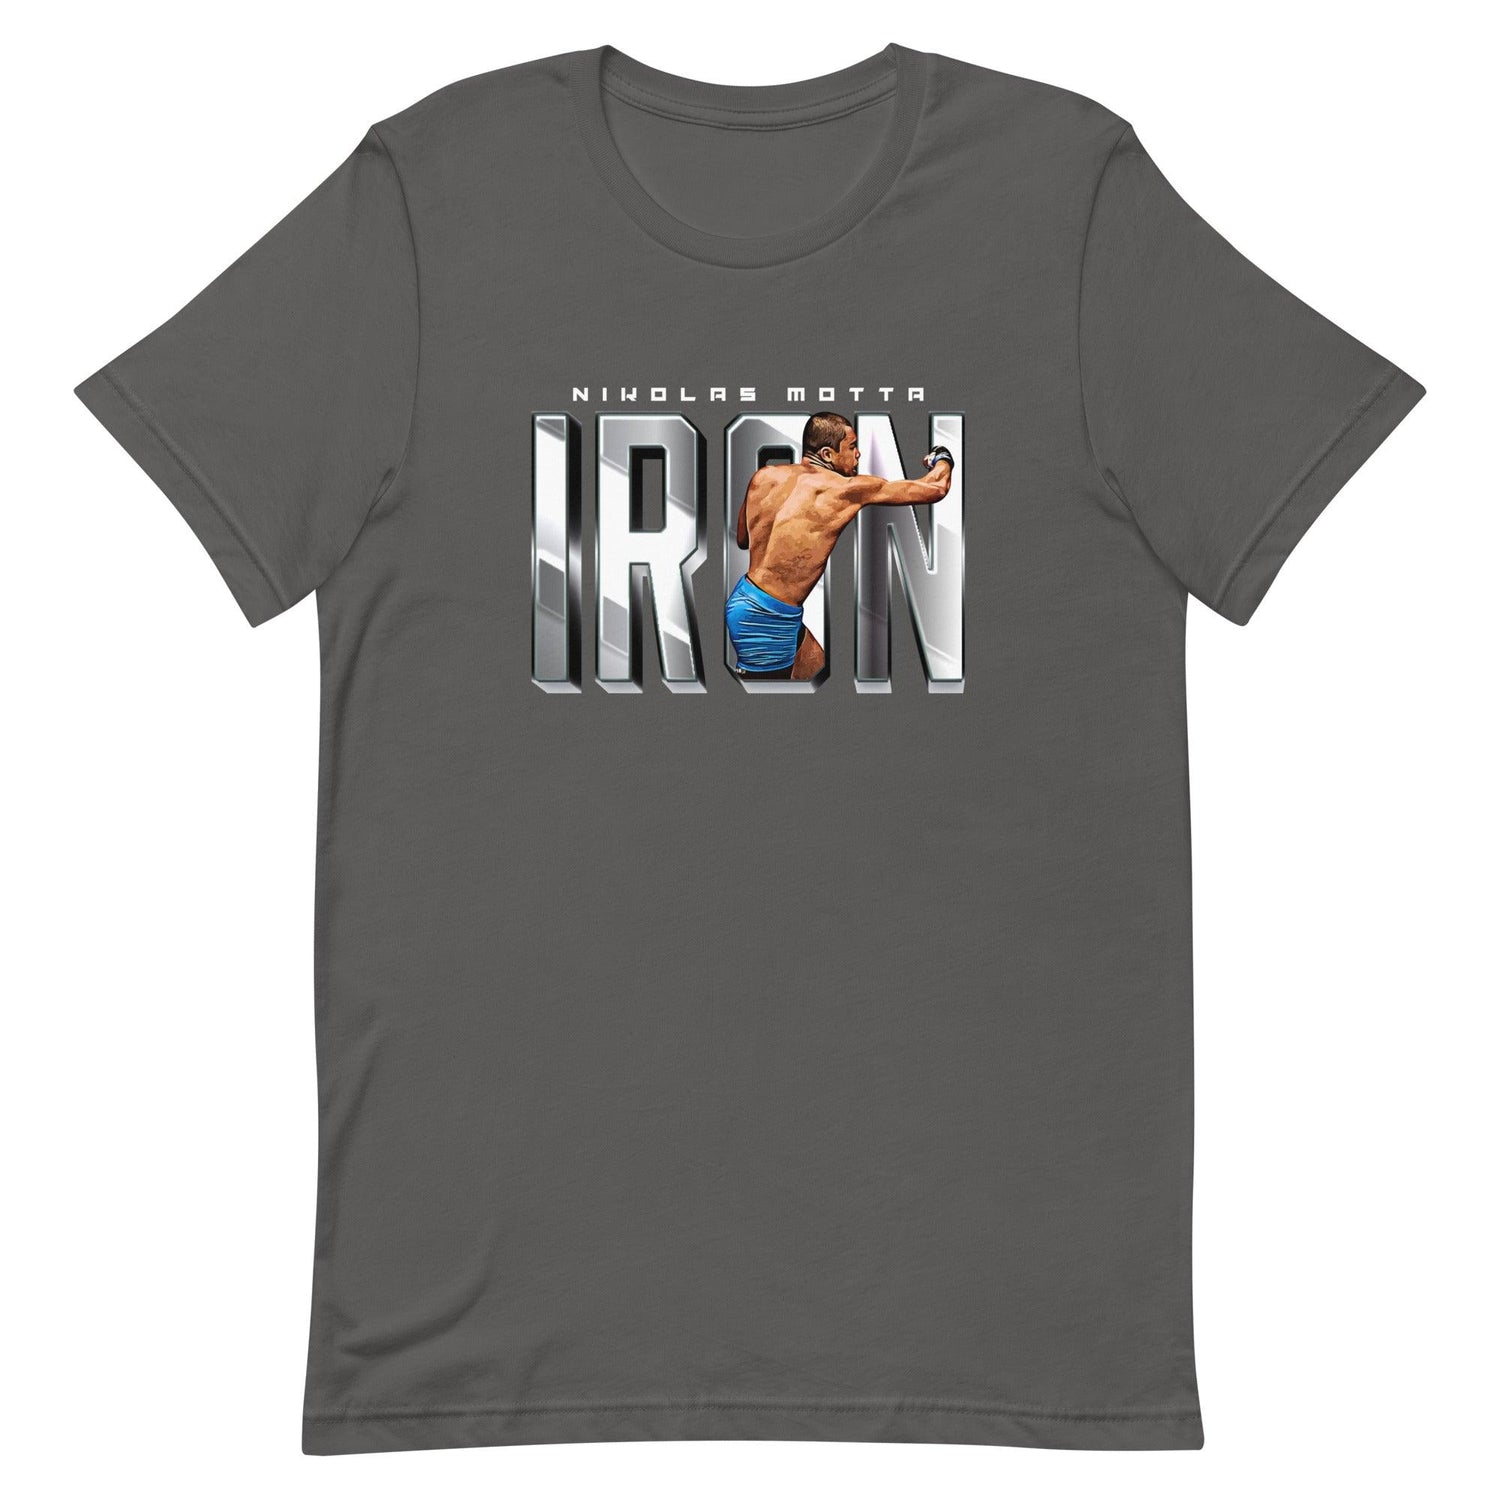 Nikolas Motta "IRON" t-shirt - Fan Arch